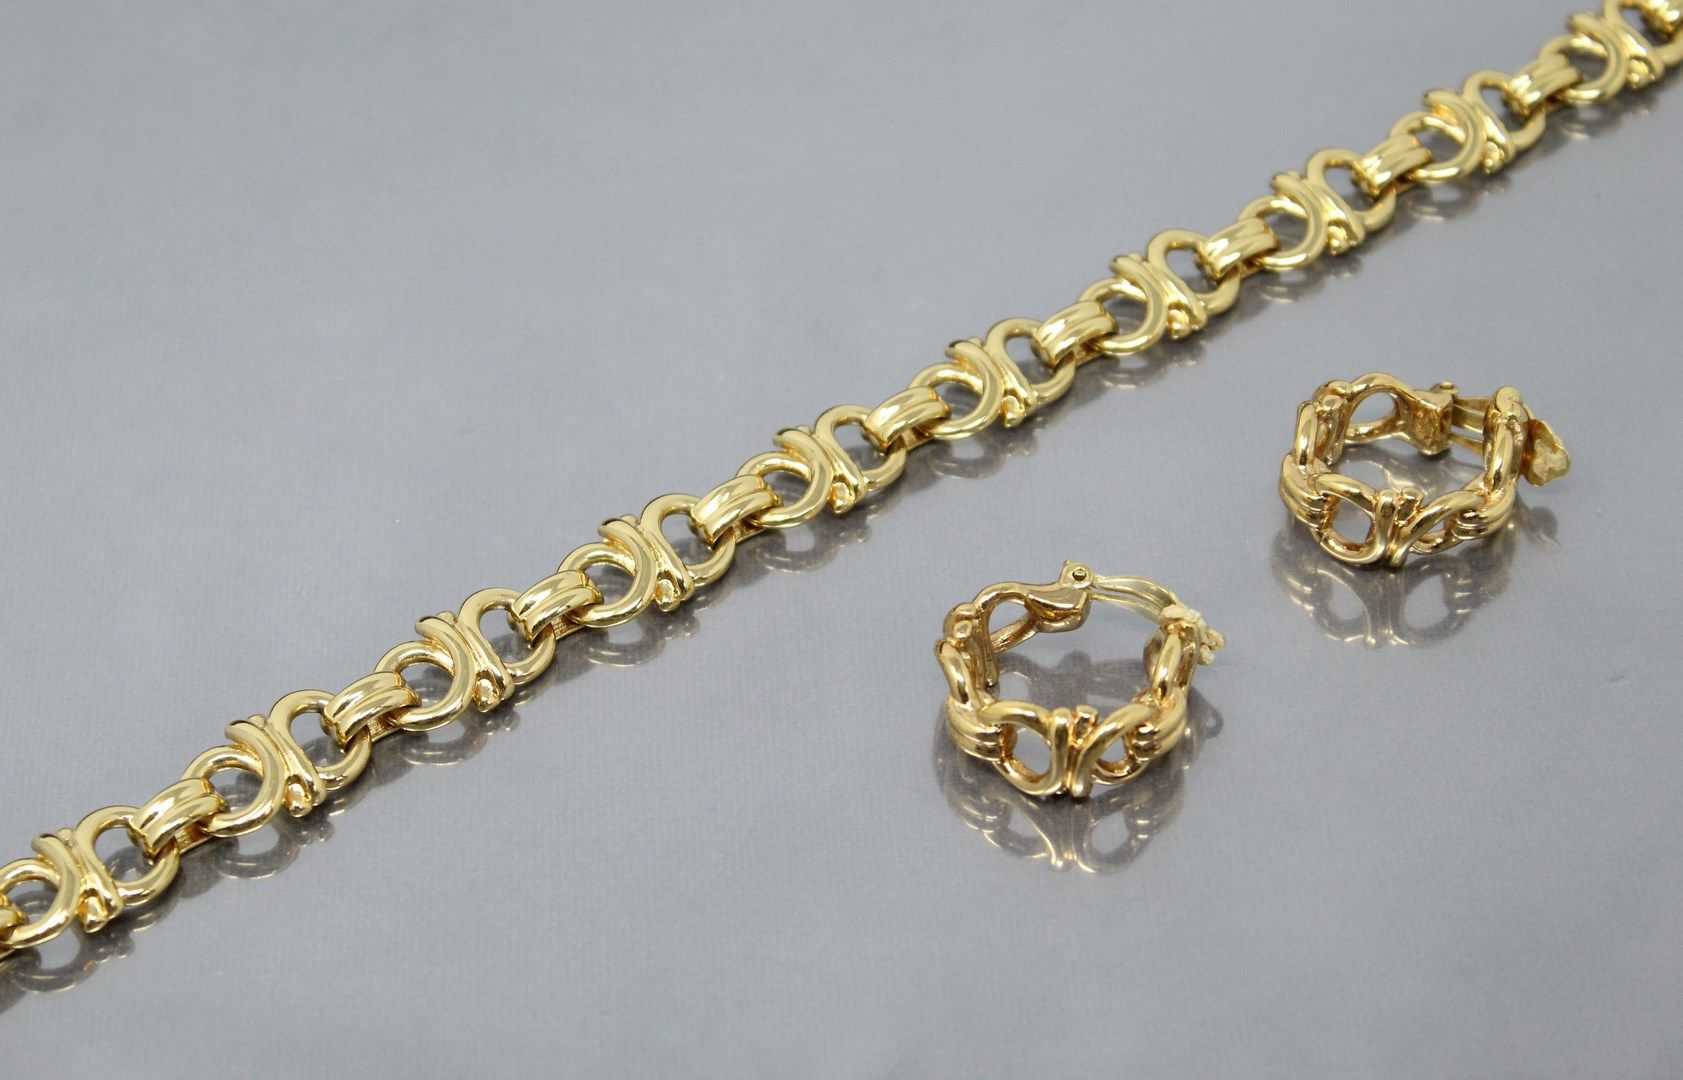 Null 半套镀金的金属，包括一条项链和一个耳夹。

颈部长度：39厘米。